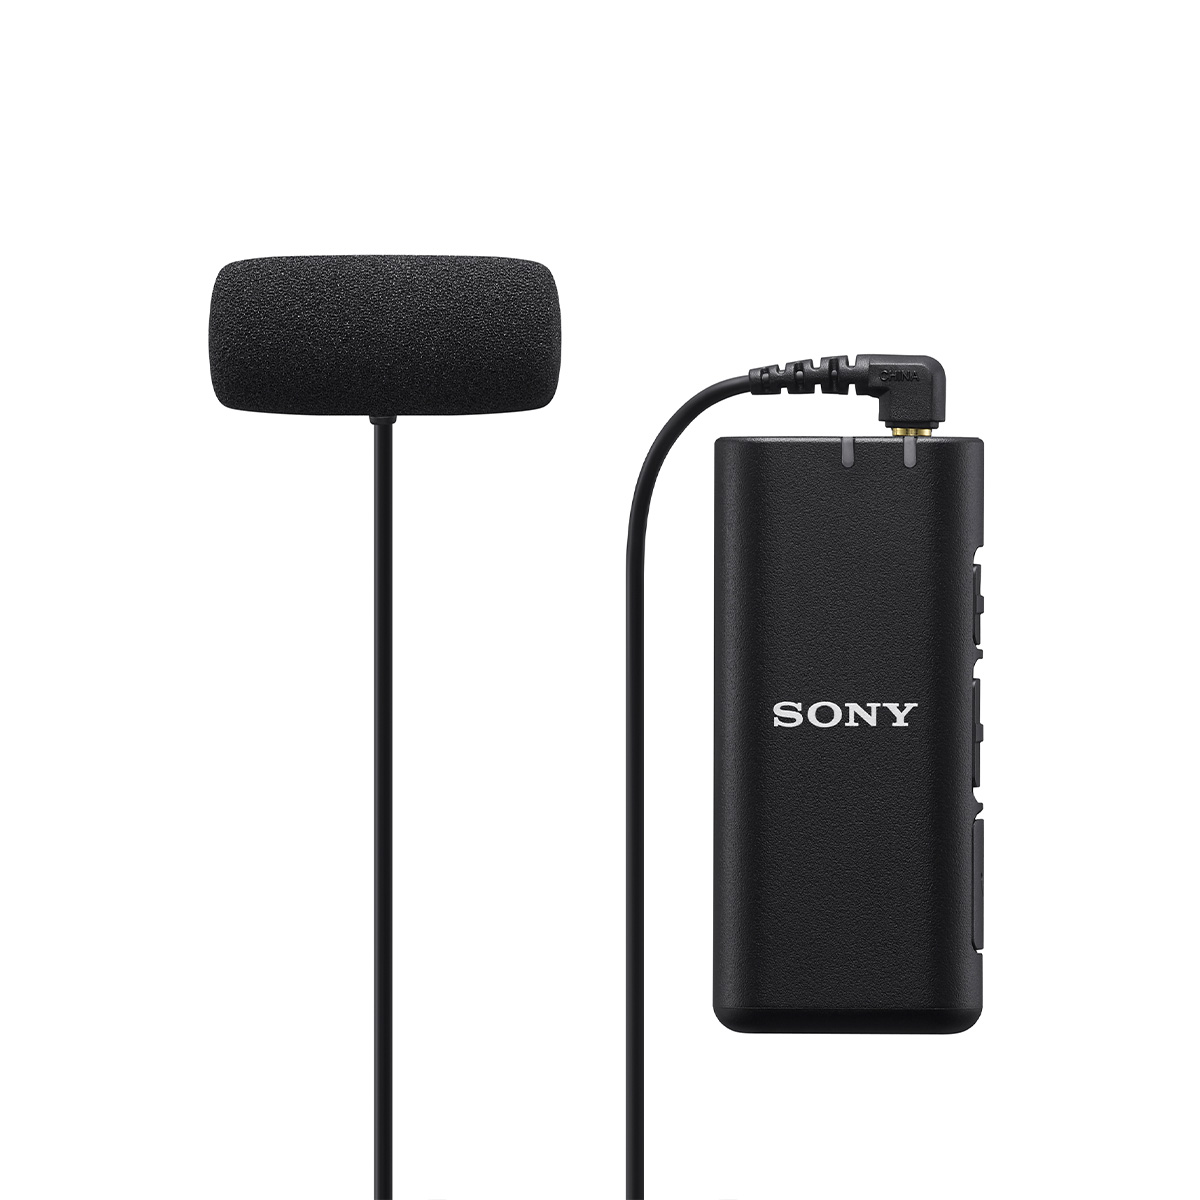 Nahaufnahme des Sony ECM-LV1 Stereo-Ansteckmikrofon an einem Sony Adapter angeschlossen